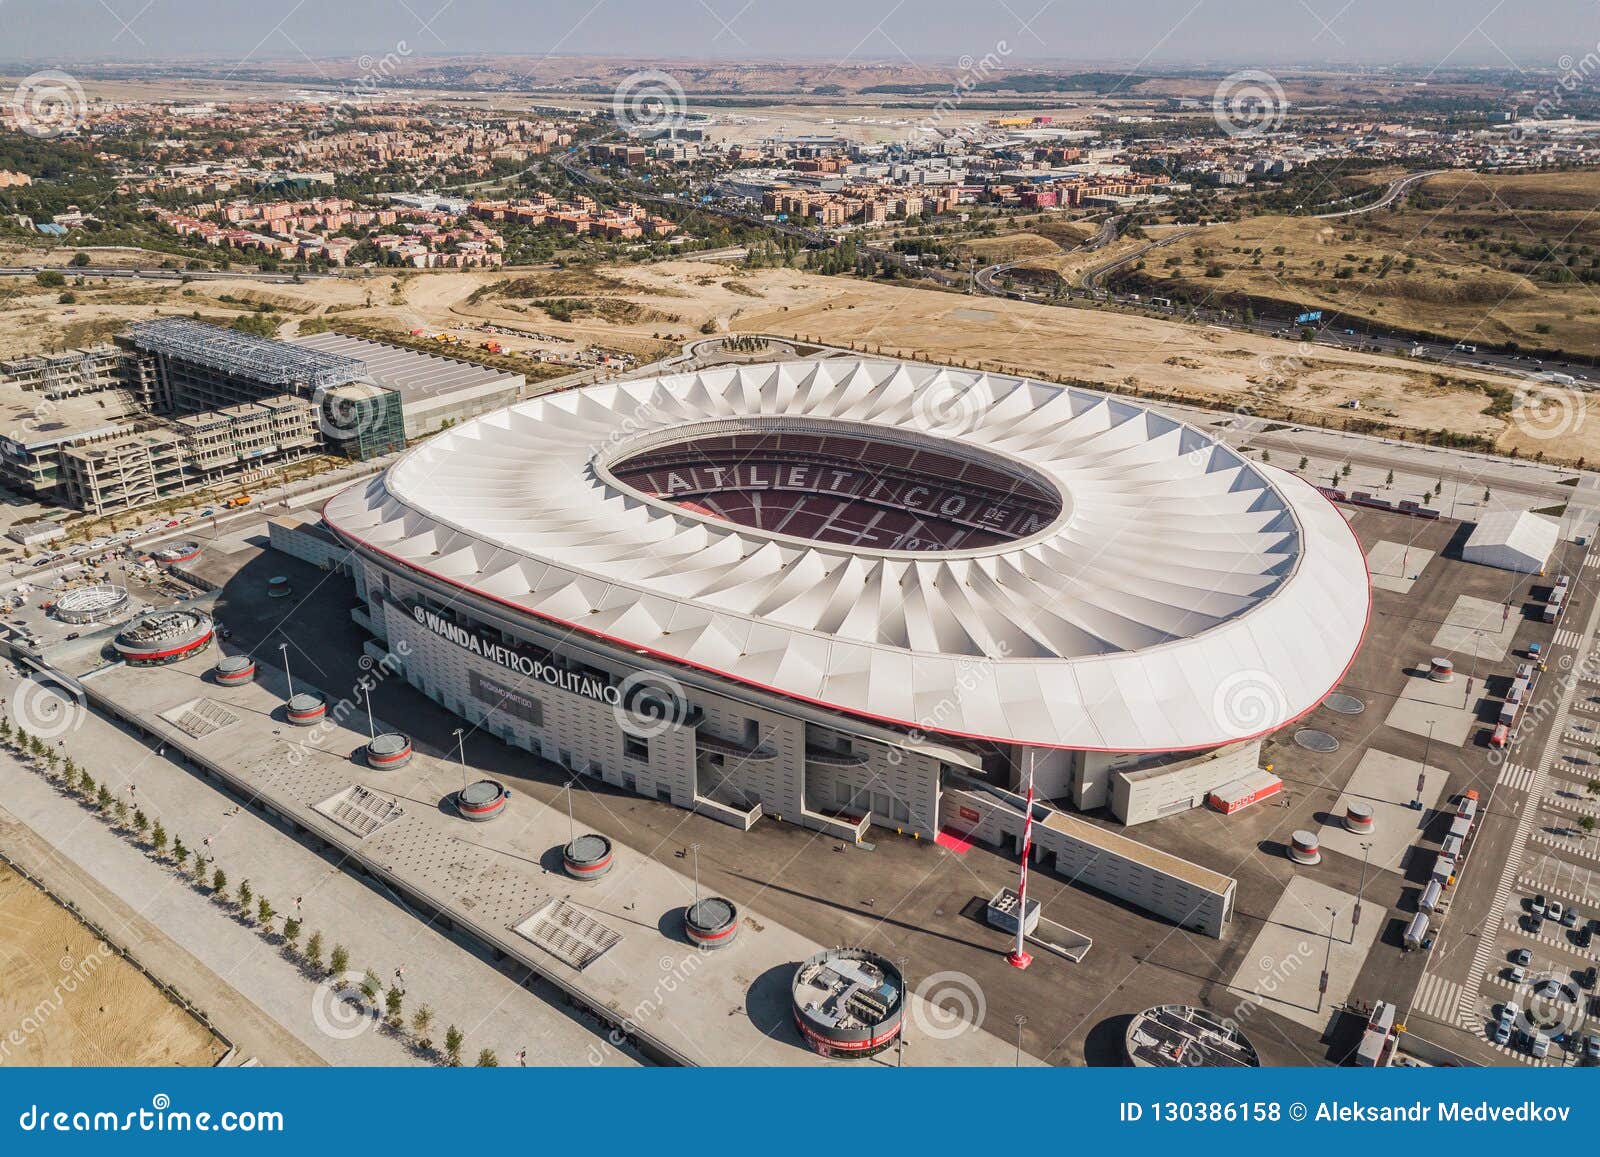 Aerial View Of Wanda Metropolitano Stadium In Madrid Editorial Stock Photo Image Of View Spain